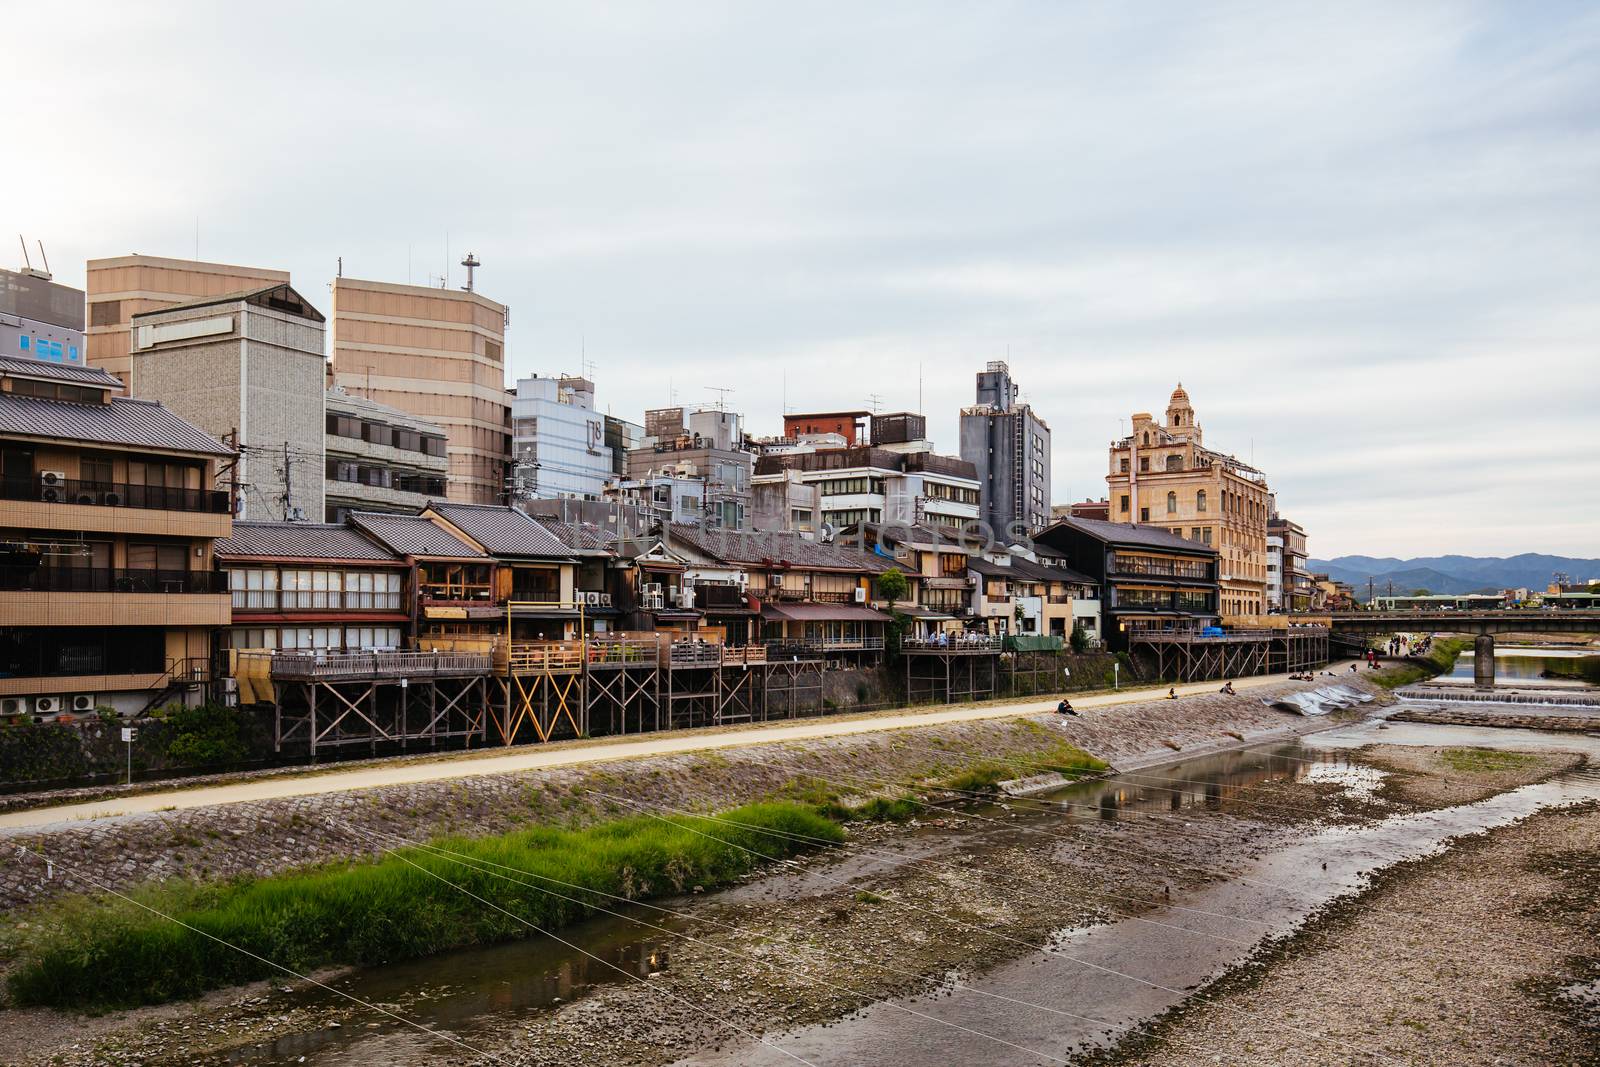 Kamo River View in Kyoto Japan by FiledIMAGE